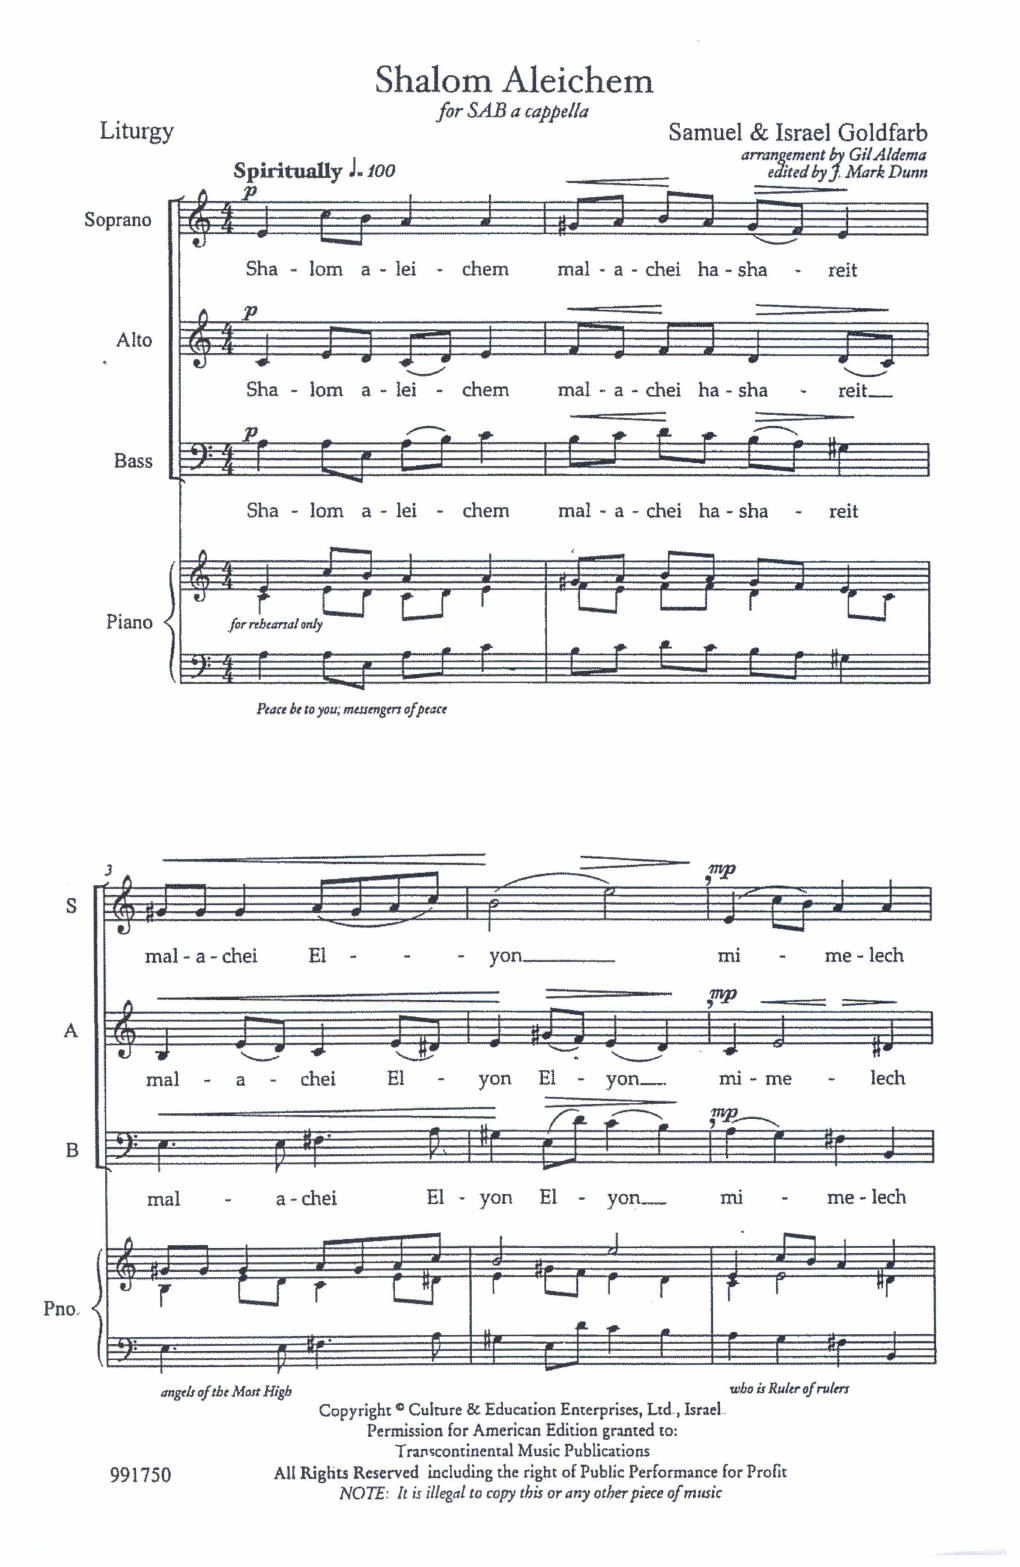 Samuel & Israel Goldfarb Shalom Aleichem (arr. Gil Aldema) Sheet Music Notes & Chords for SAB Choir - Download or Print PDF